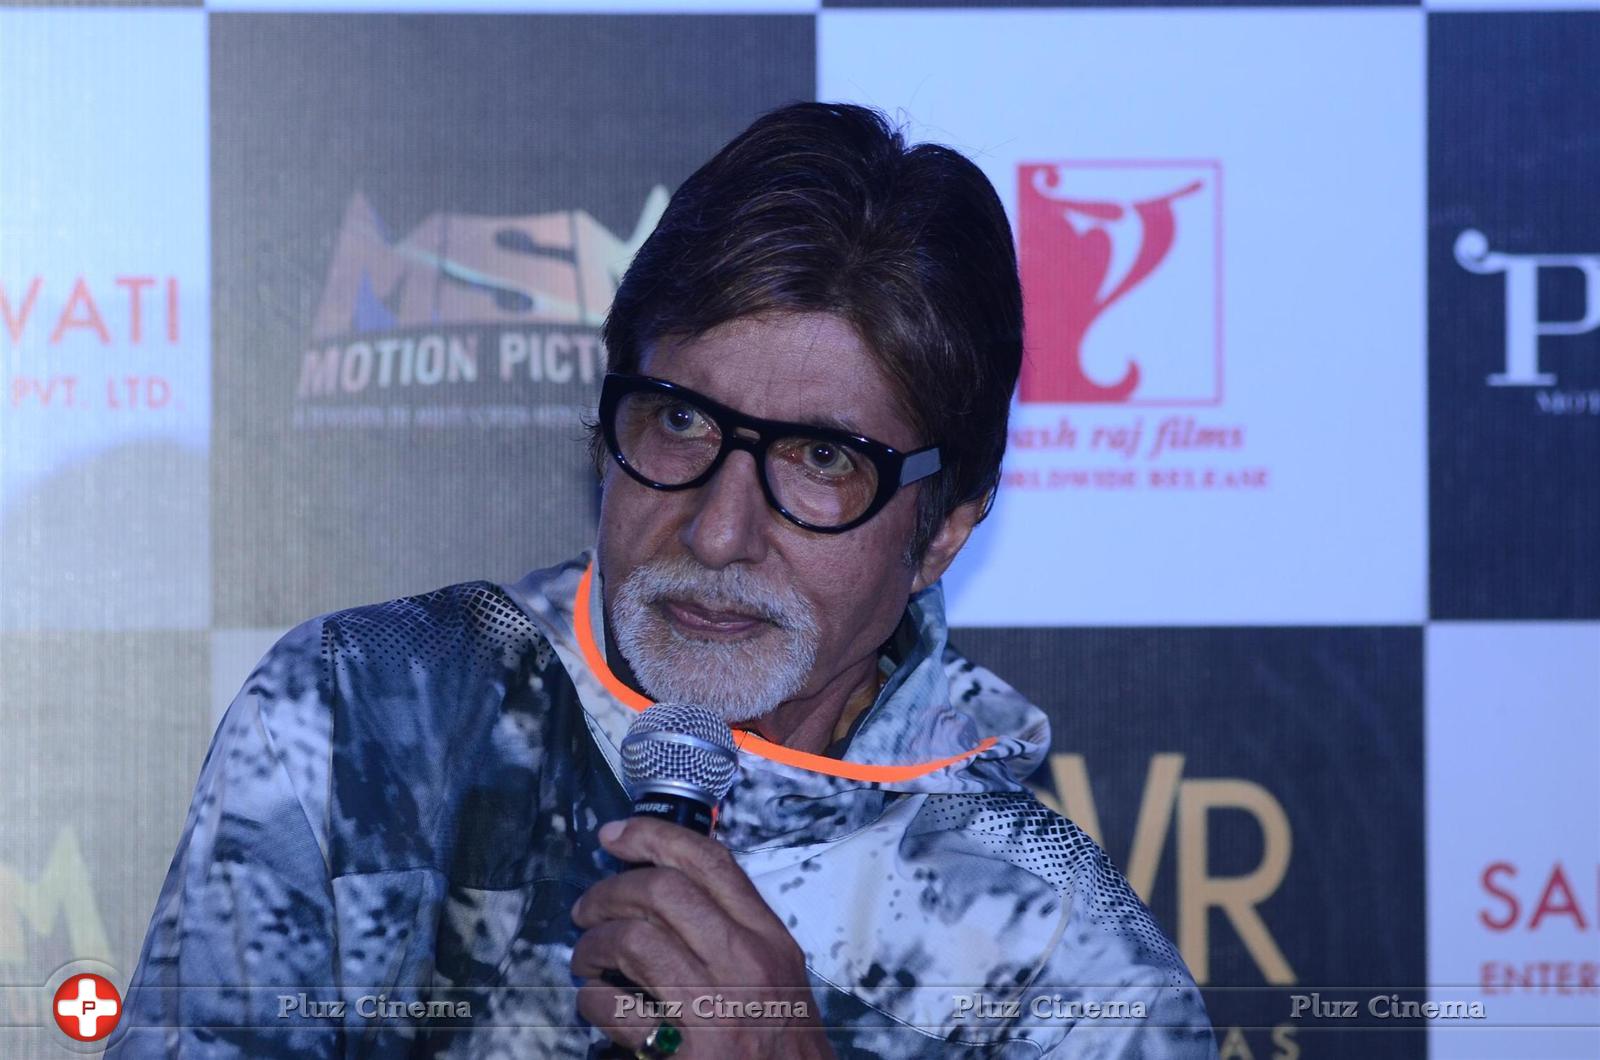 Amitabh Bachchan - Big B, Deepika Padukone, Irrfan at film Piku Trailer Launch Photos | Picture 1001516